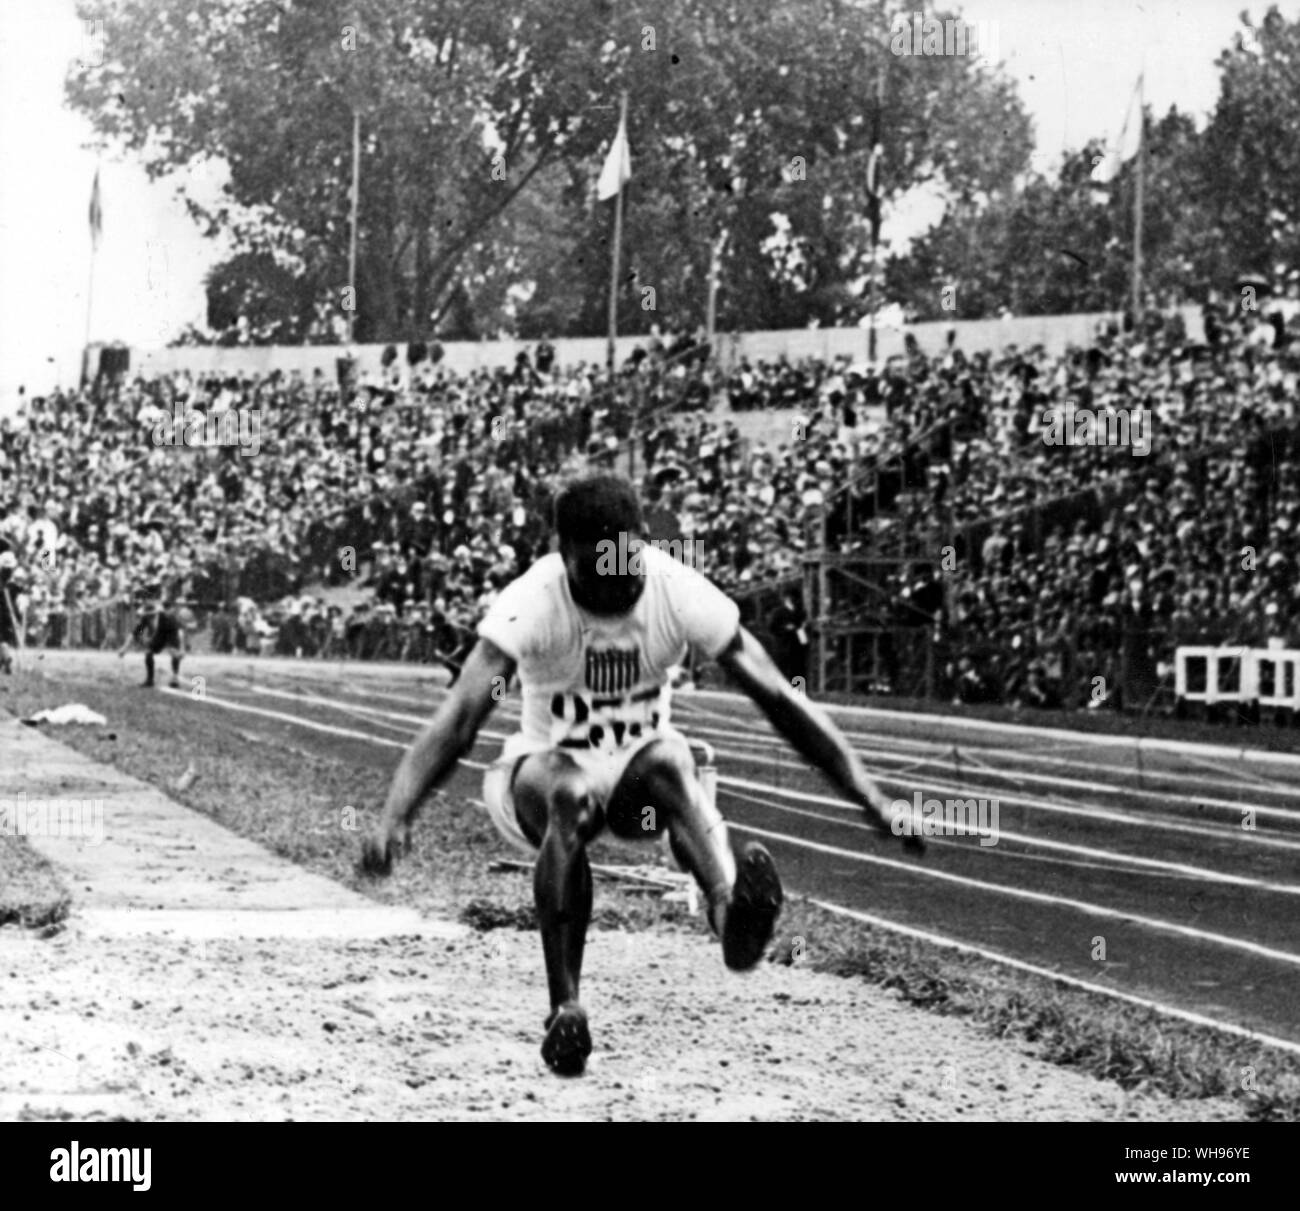 France, Paris Olympics, 1924: William de Hart Hubbard (USA) in the long jump. Stock Photo